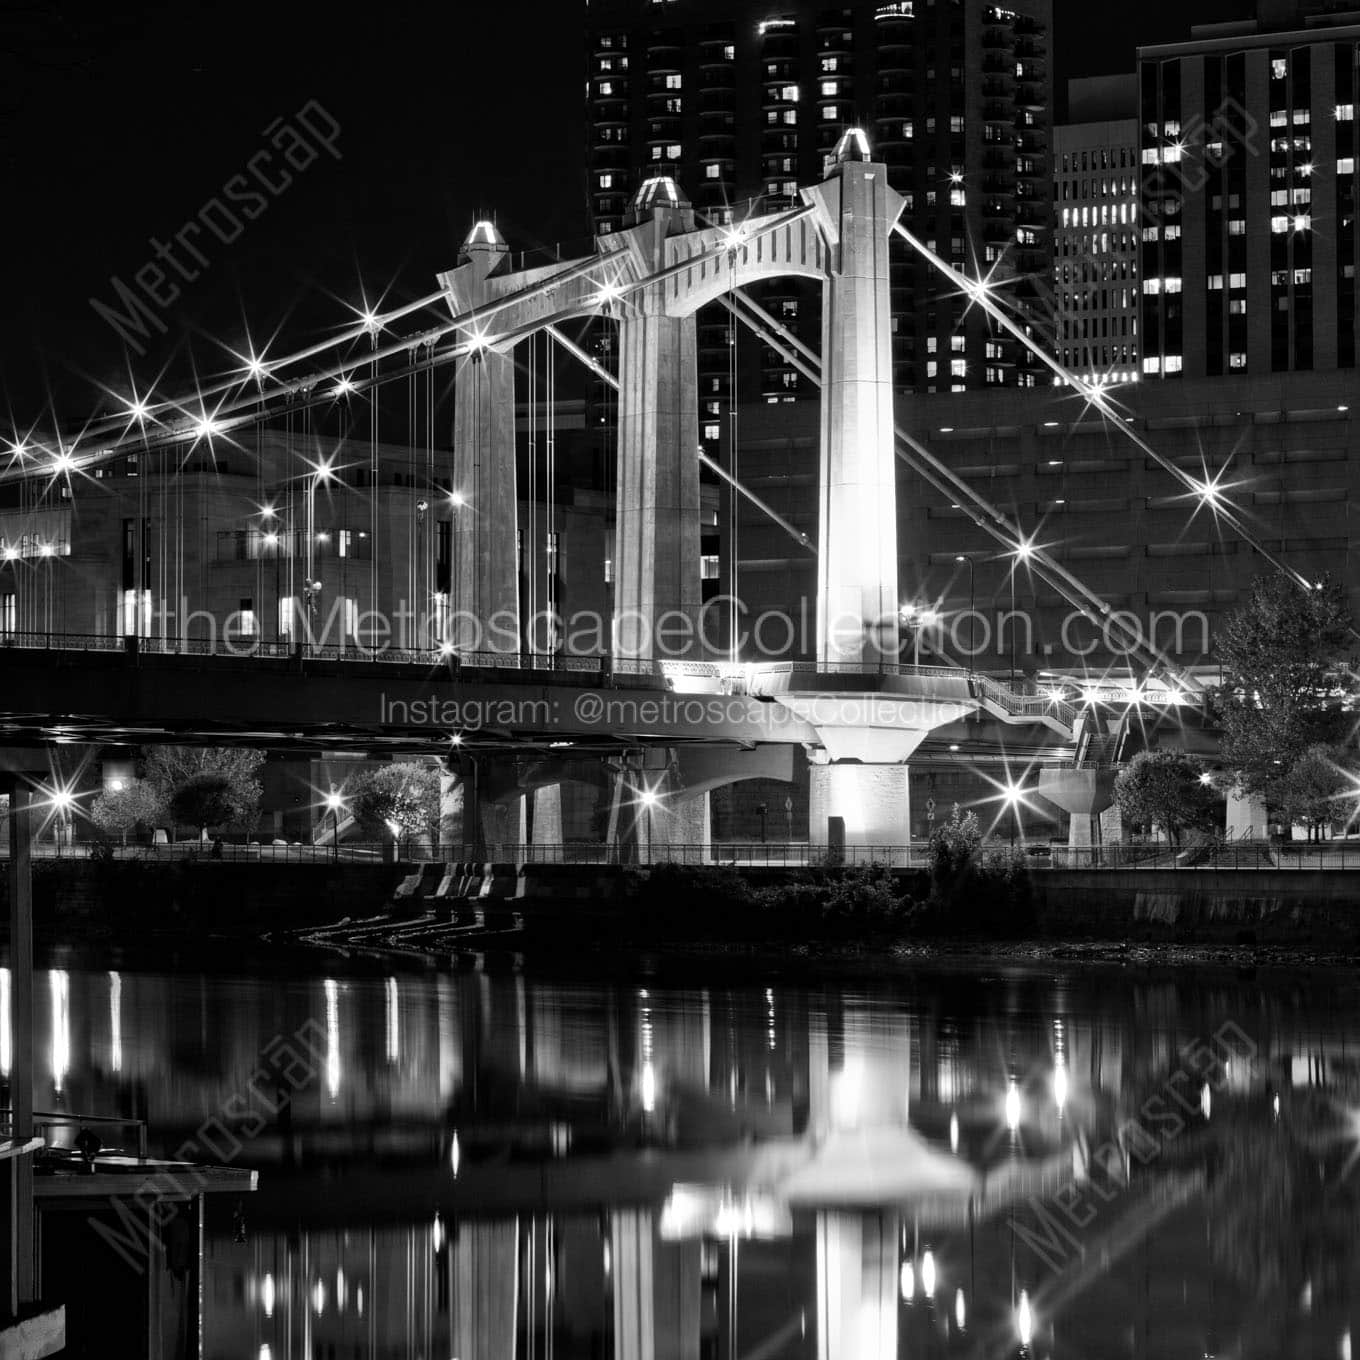 hennepin avenue bridge at night Black & White Office Art